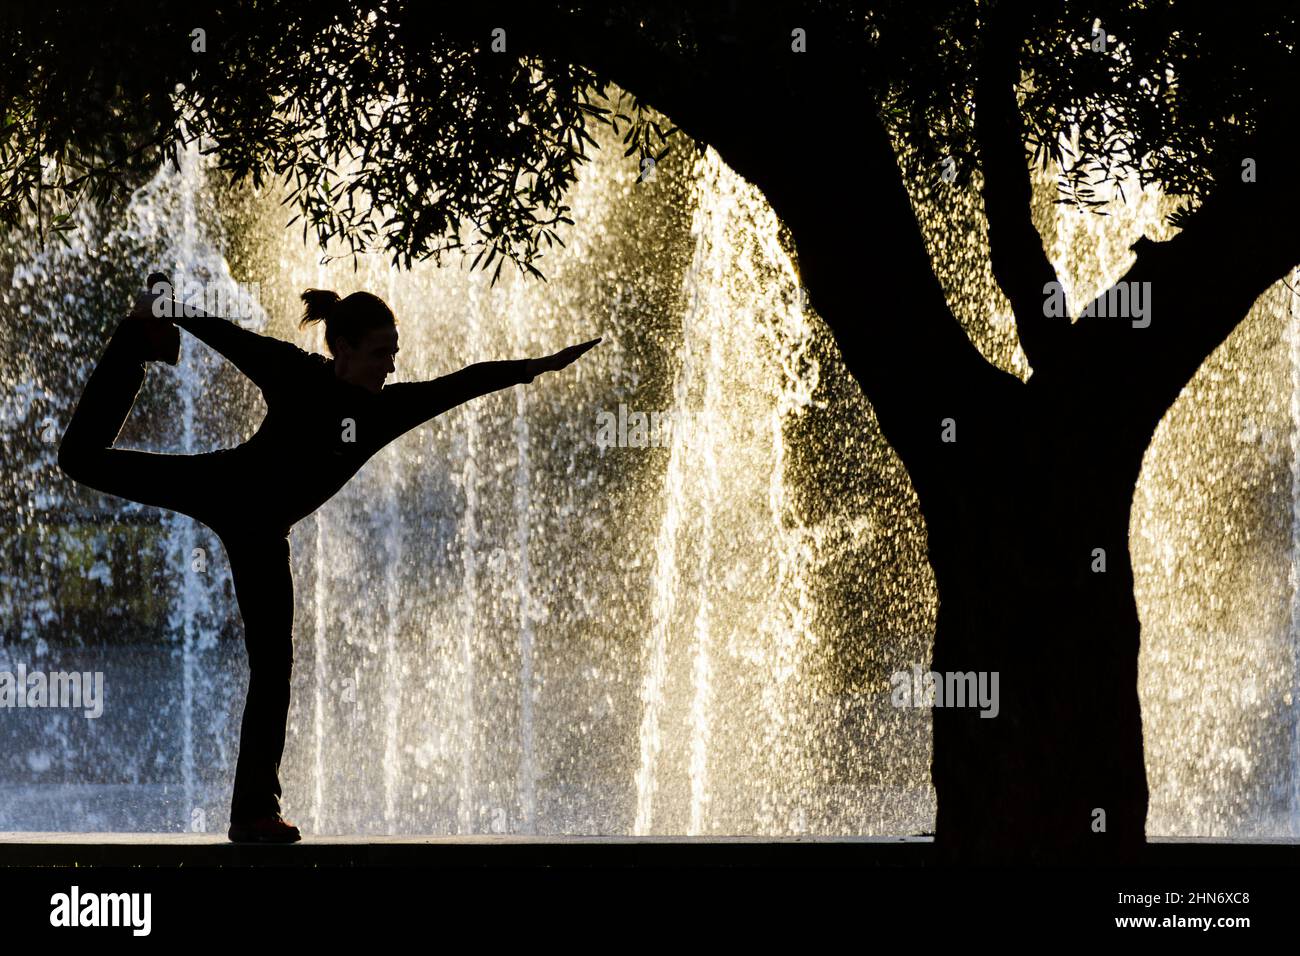 mujer practicando Yoga, parque de la Riera,Palma, Mallorca, islas baleares, Spain Stock Photo